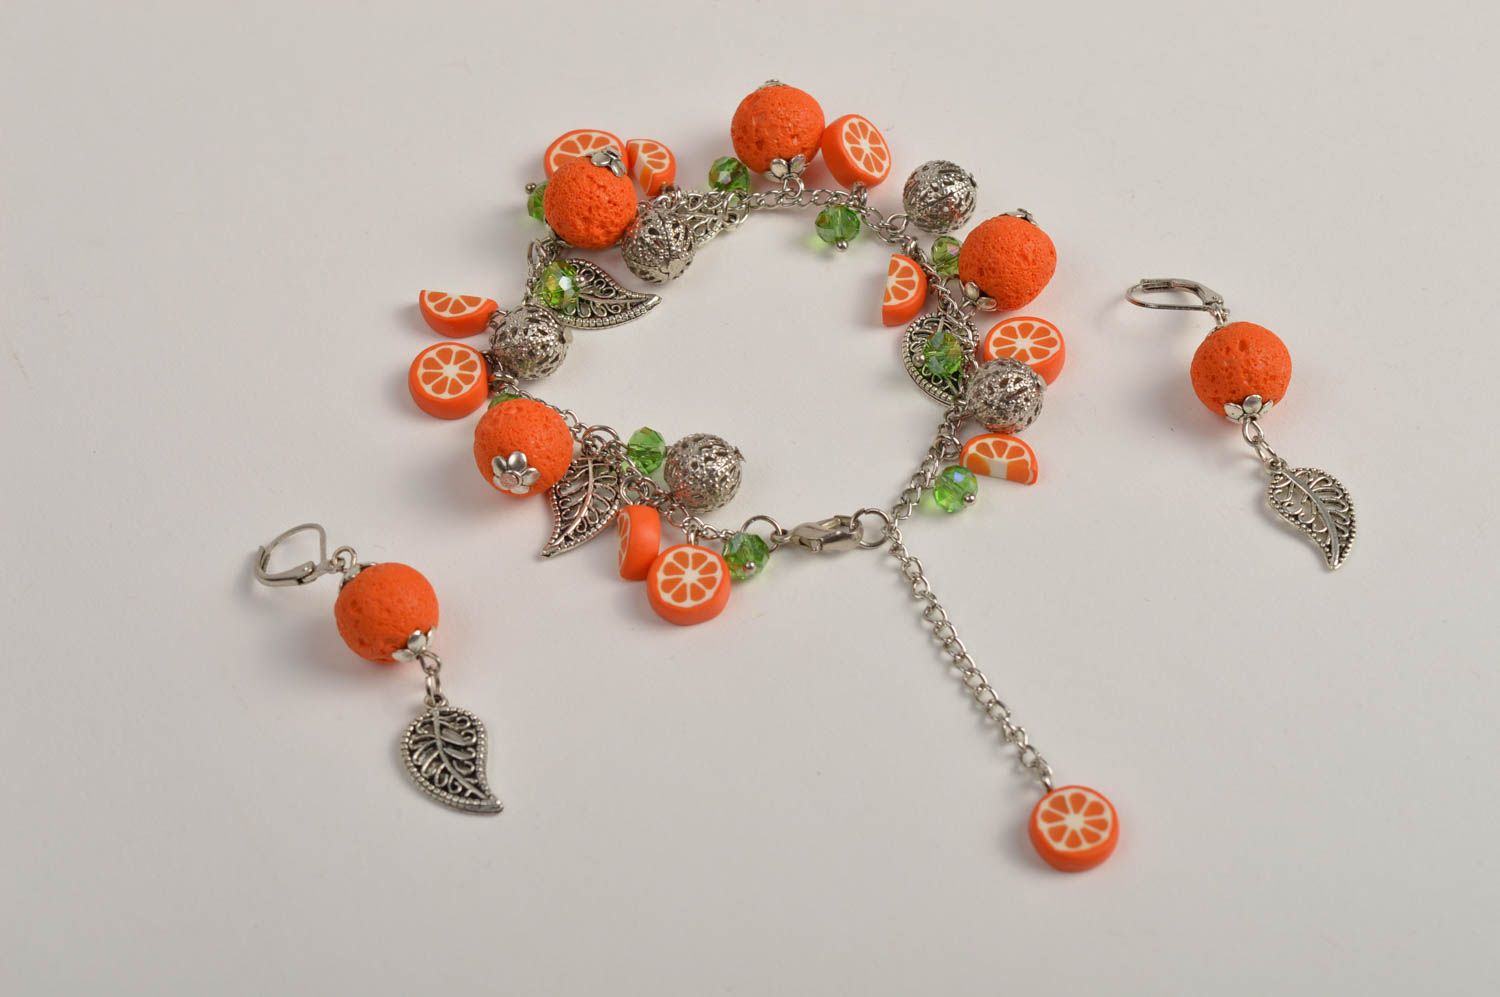 Wrist bracelet fashion earrings polymer clay citrus jewelry women jewelry photo 3